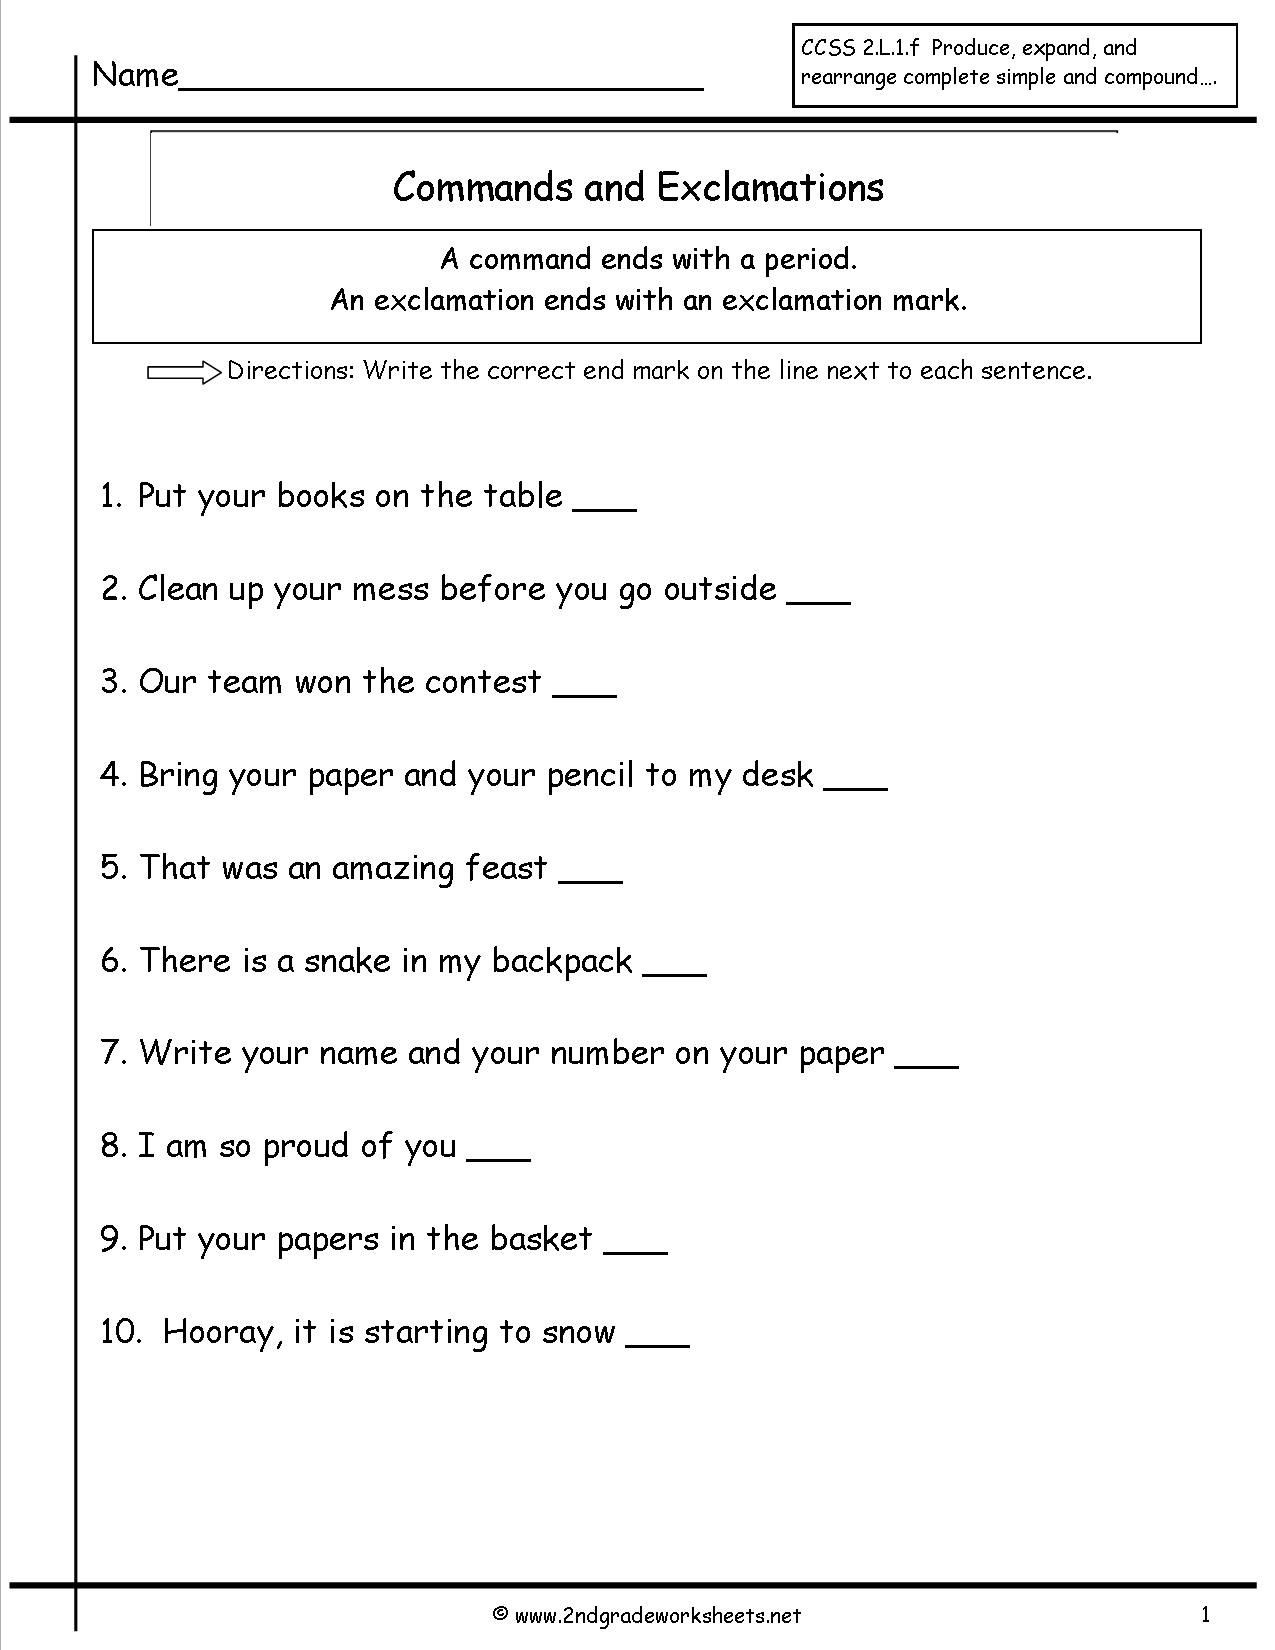 Four Types Of Sentences Worksheet Mands or Exclamations Worksheet